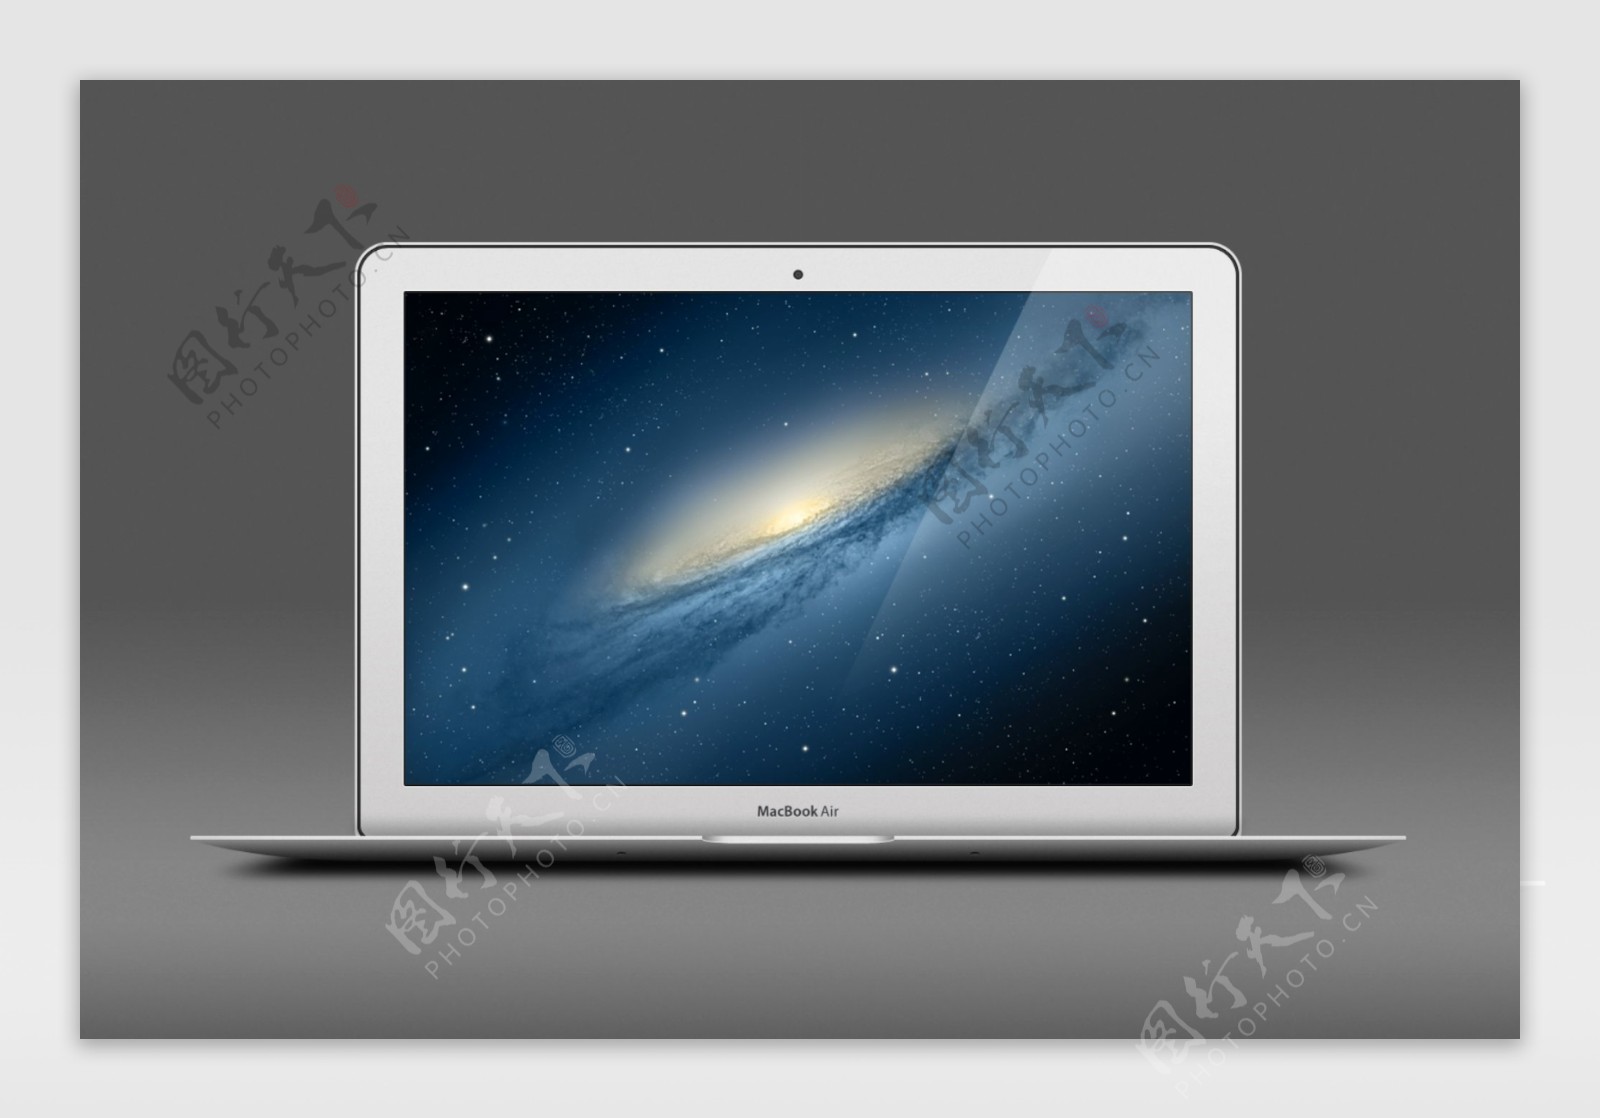 苹果笔记本MacBookAir